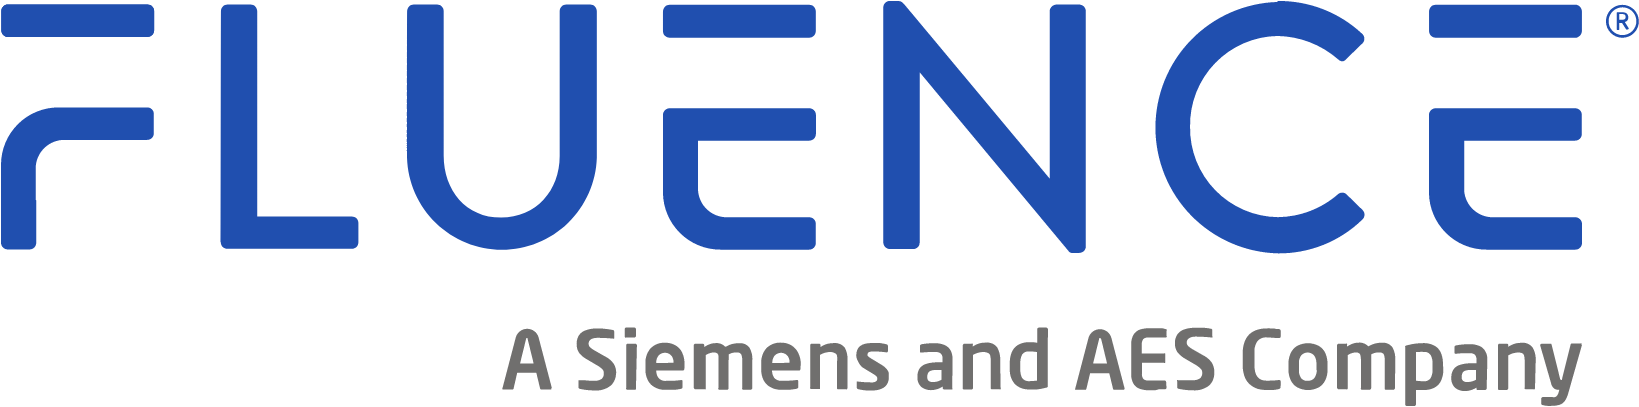 Fluence Energy logo large (transparent PNG)